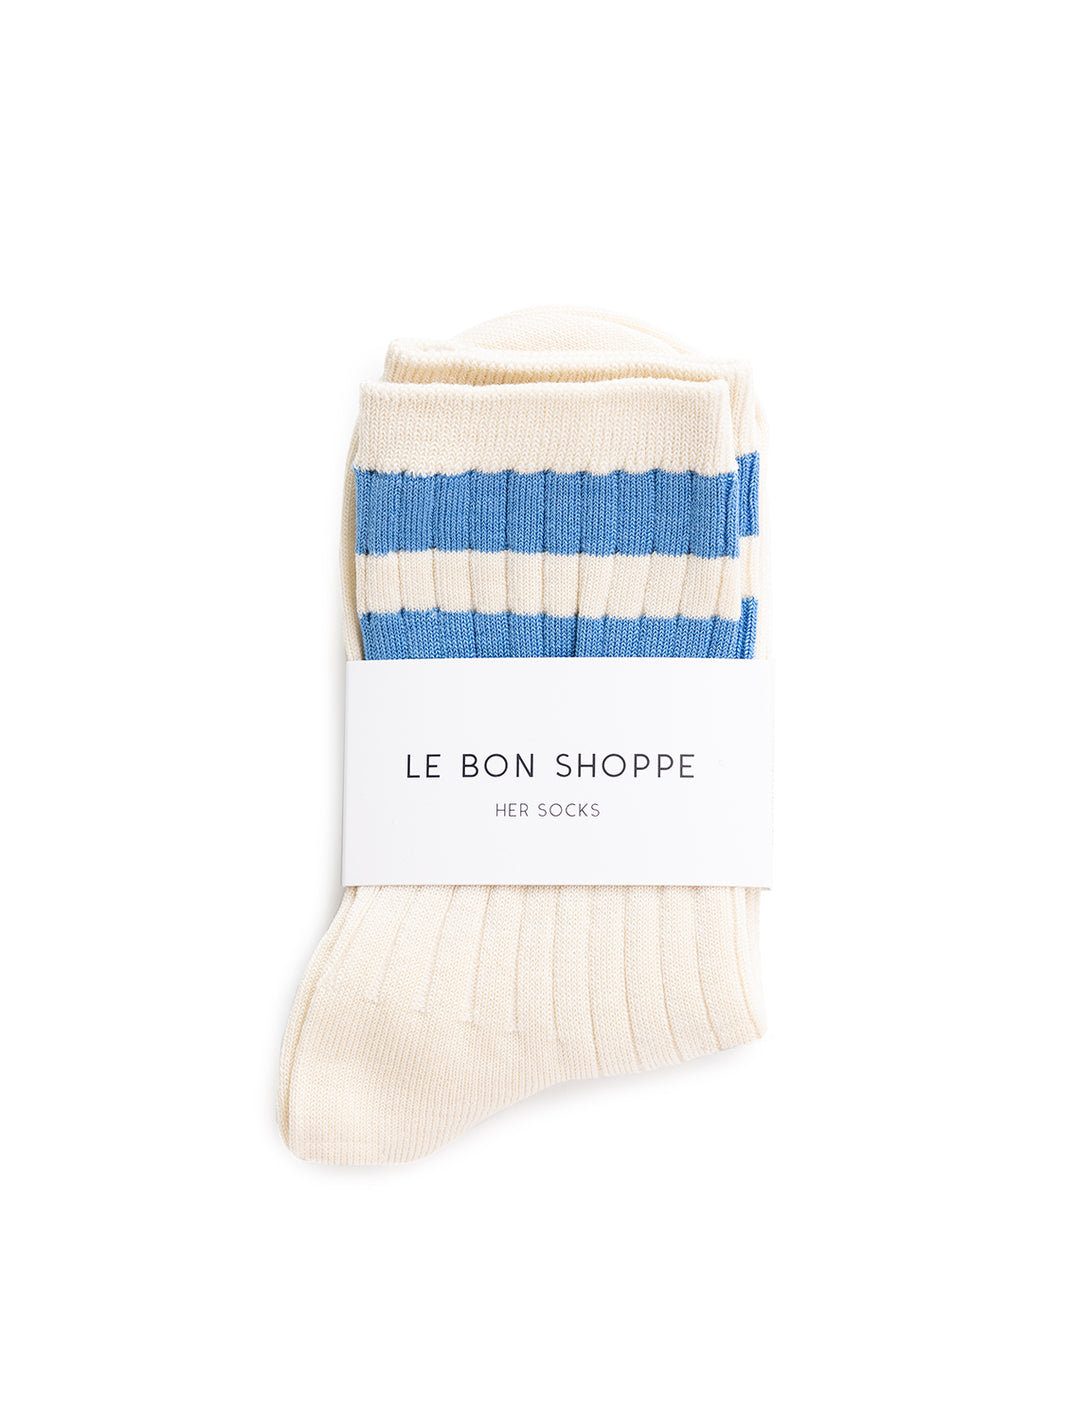 Front view of Le Bon Shoppe's her socks varsity in blue.